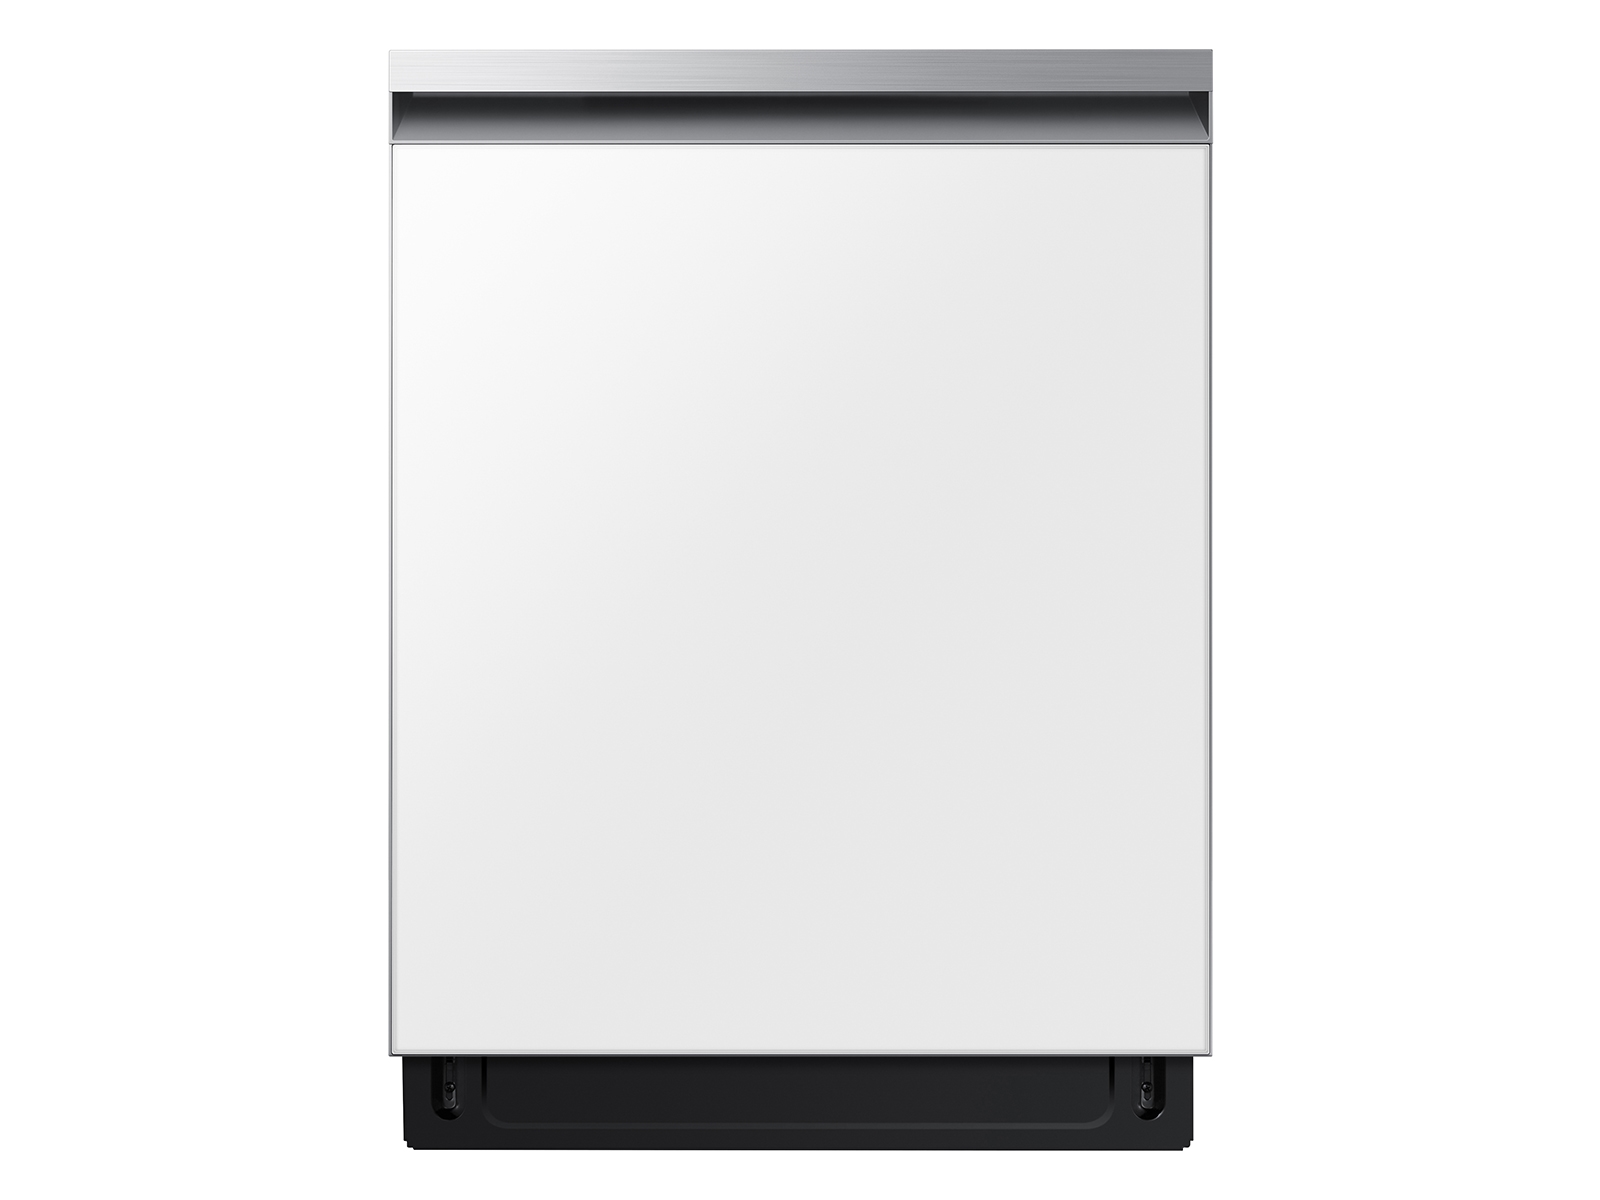 Thumbnail image of Bespoke AutoRelease Smart 46dBA Dishwasher with StormWash&trade; in White Glass